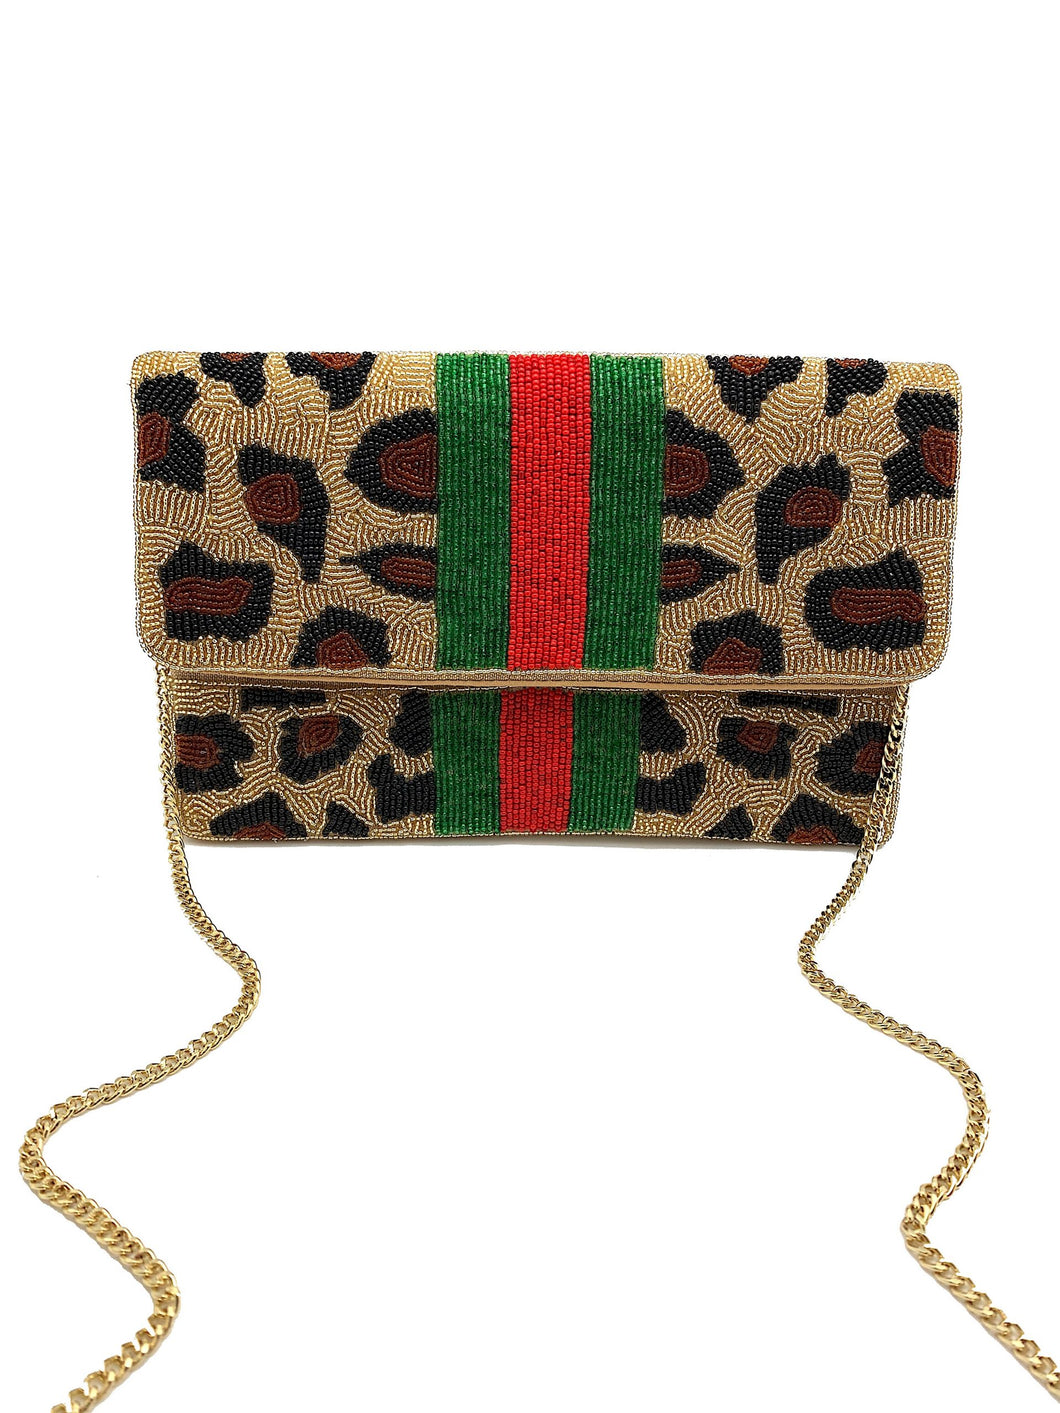 Leopard Print Beaded Clutch - Green/Red Stripe